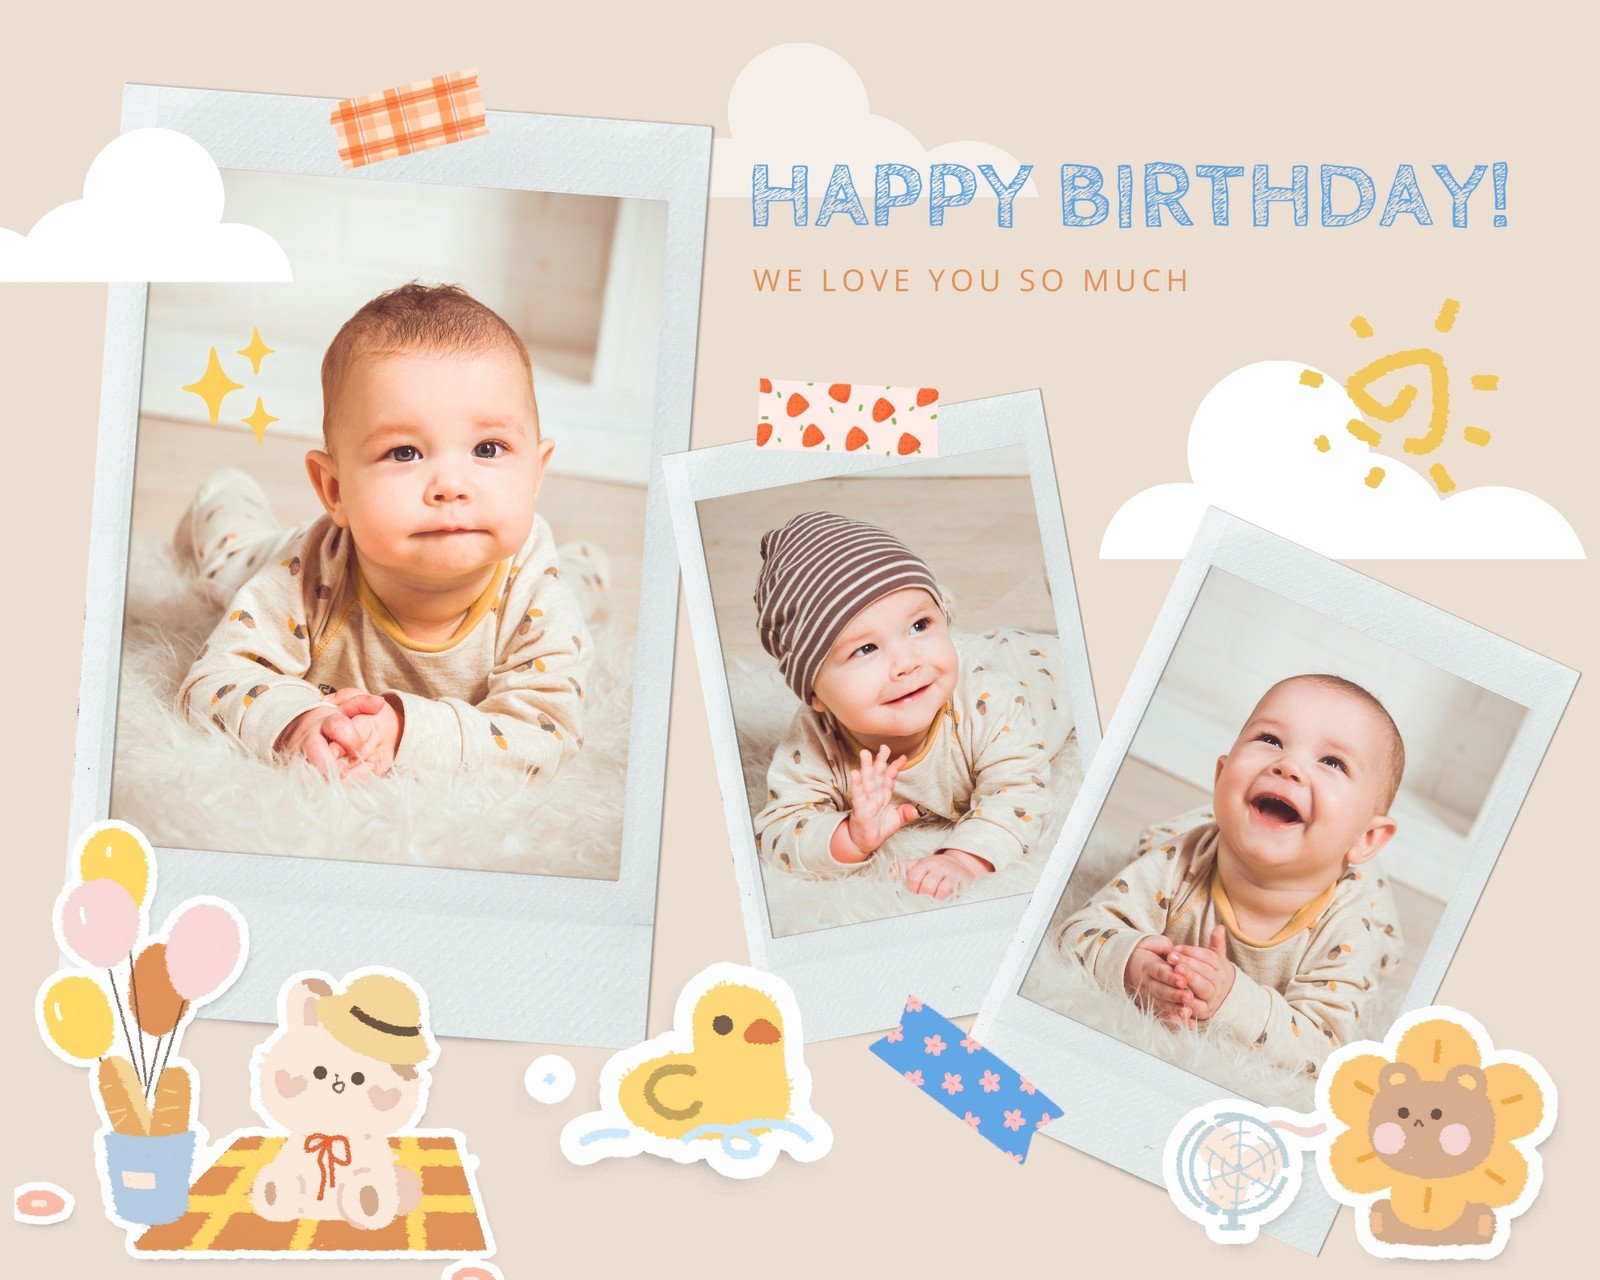 https://marketplace.canva.com/EAFG8QNViOA/1/0/1600w/canva-beige-playful-happy-birthday-photo-collage-pK-UuSjiOQo.jpg